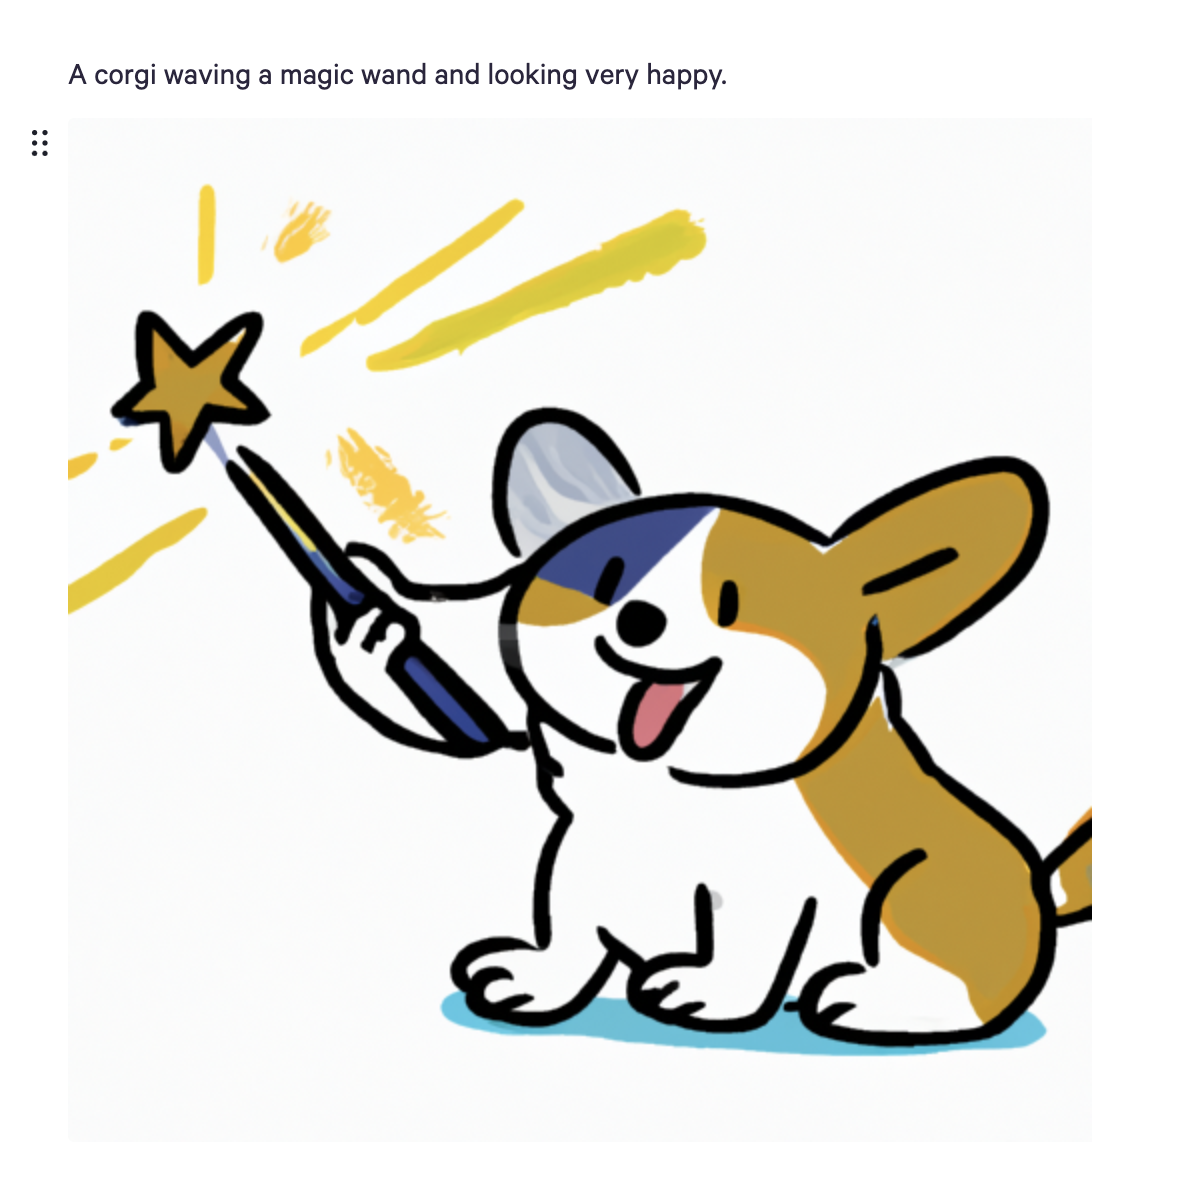 AI-generated image of corgi waving magic wand and looking very happy